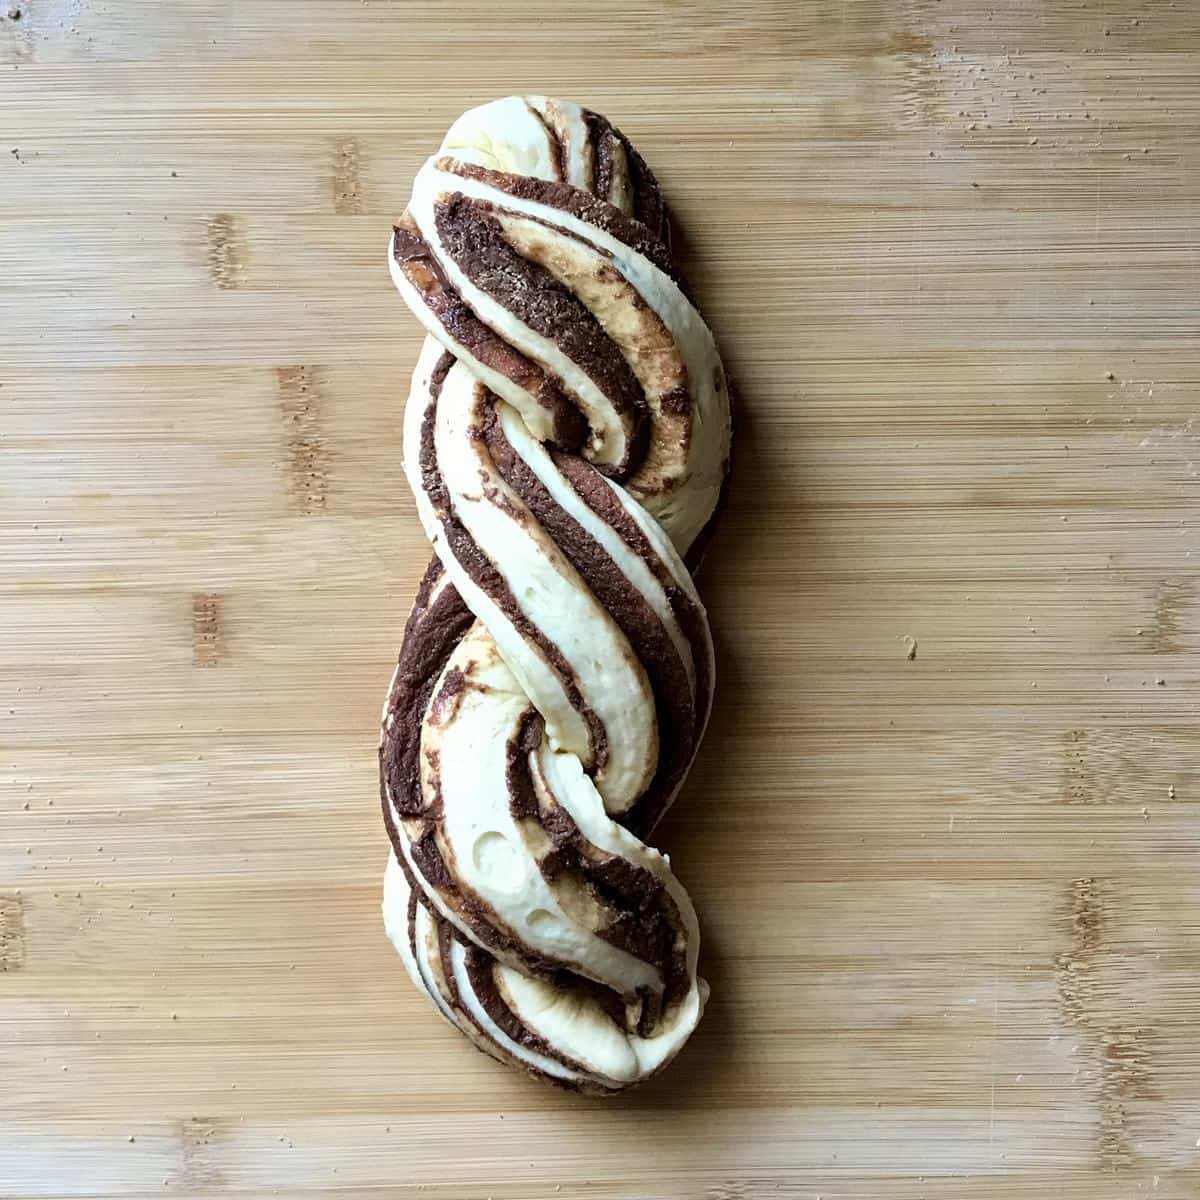 A braided sweet bread on a wooden board. 